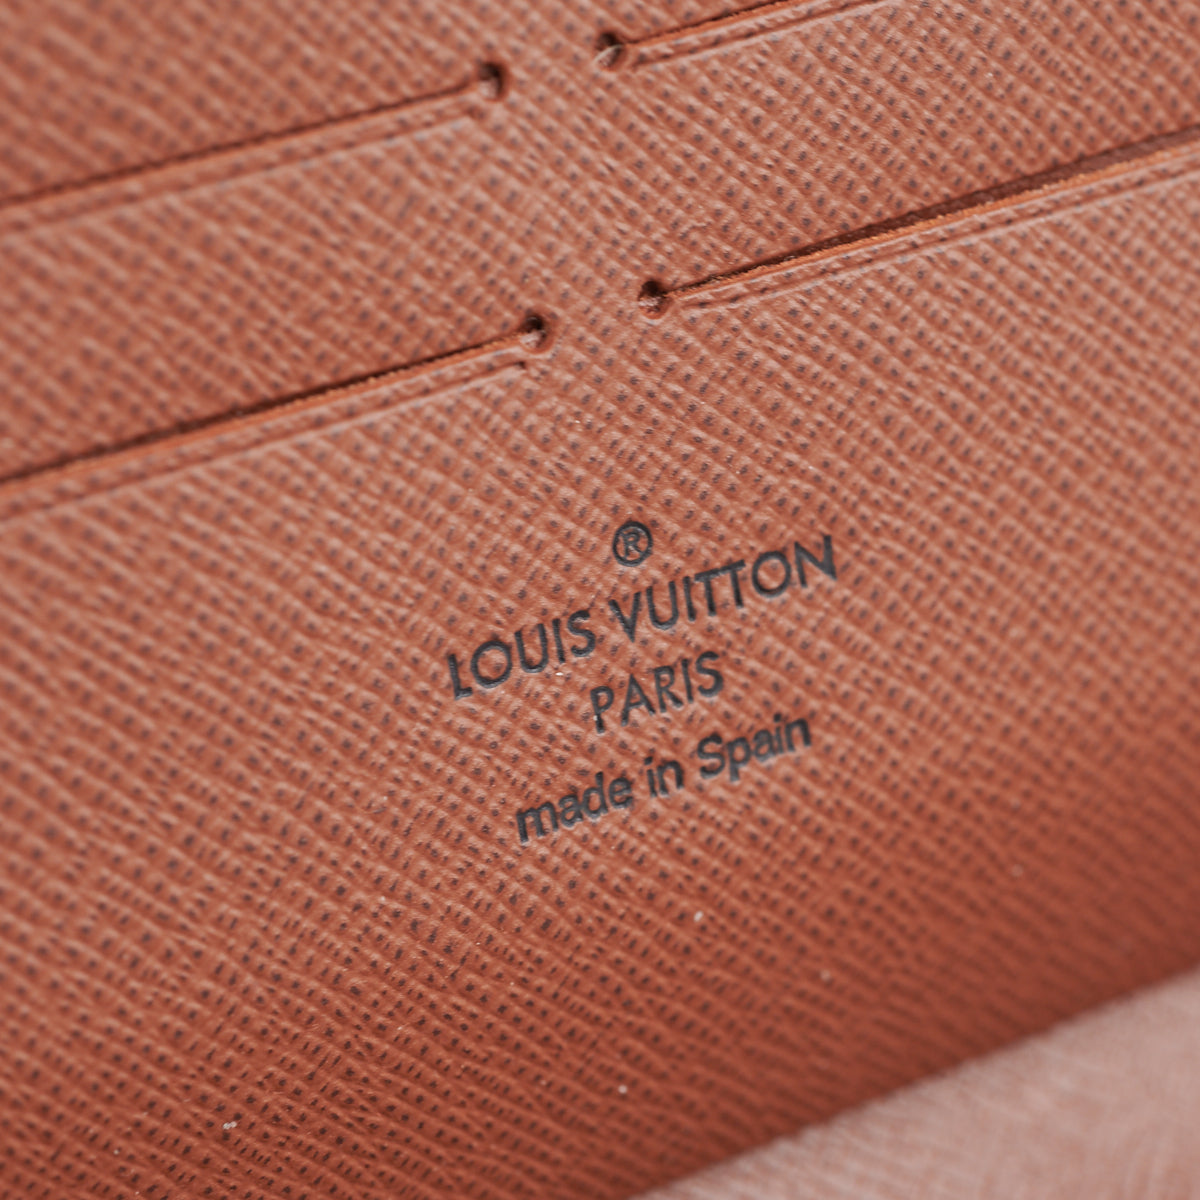 Louis Vuitton® Zippy Organizer  Louis vuitton wallet zippy, Louis